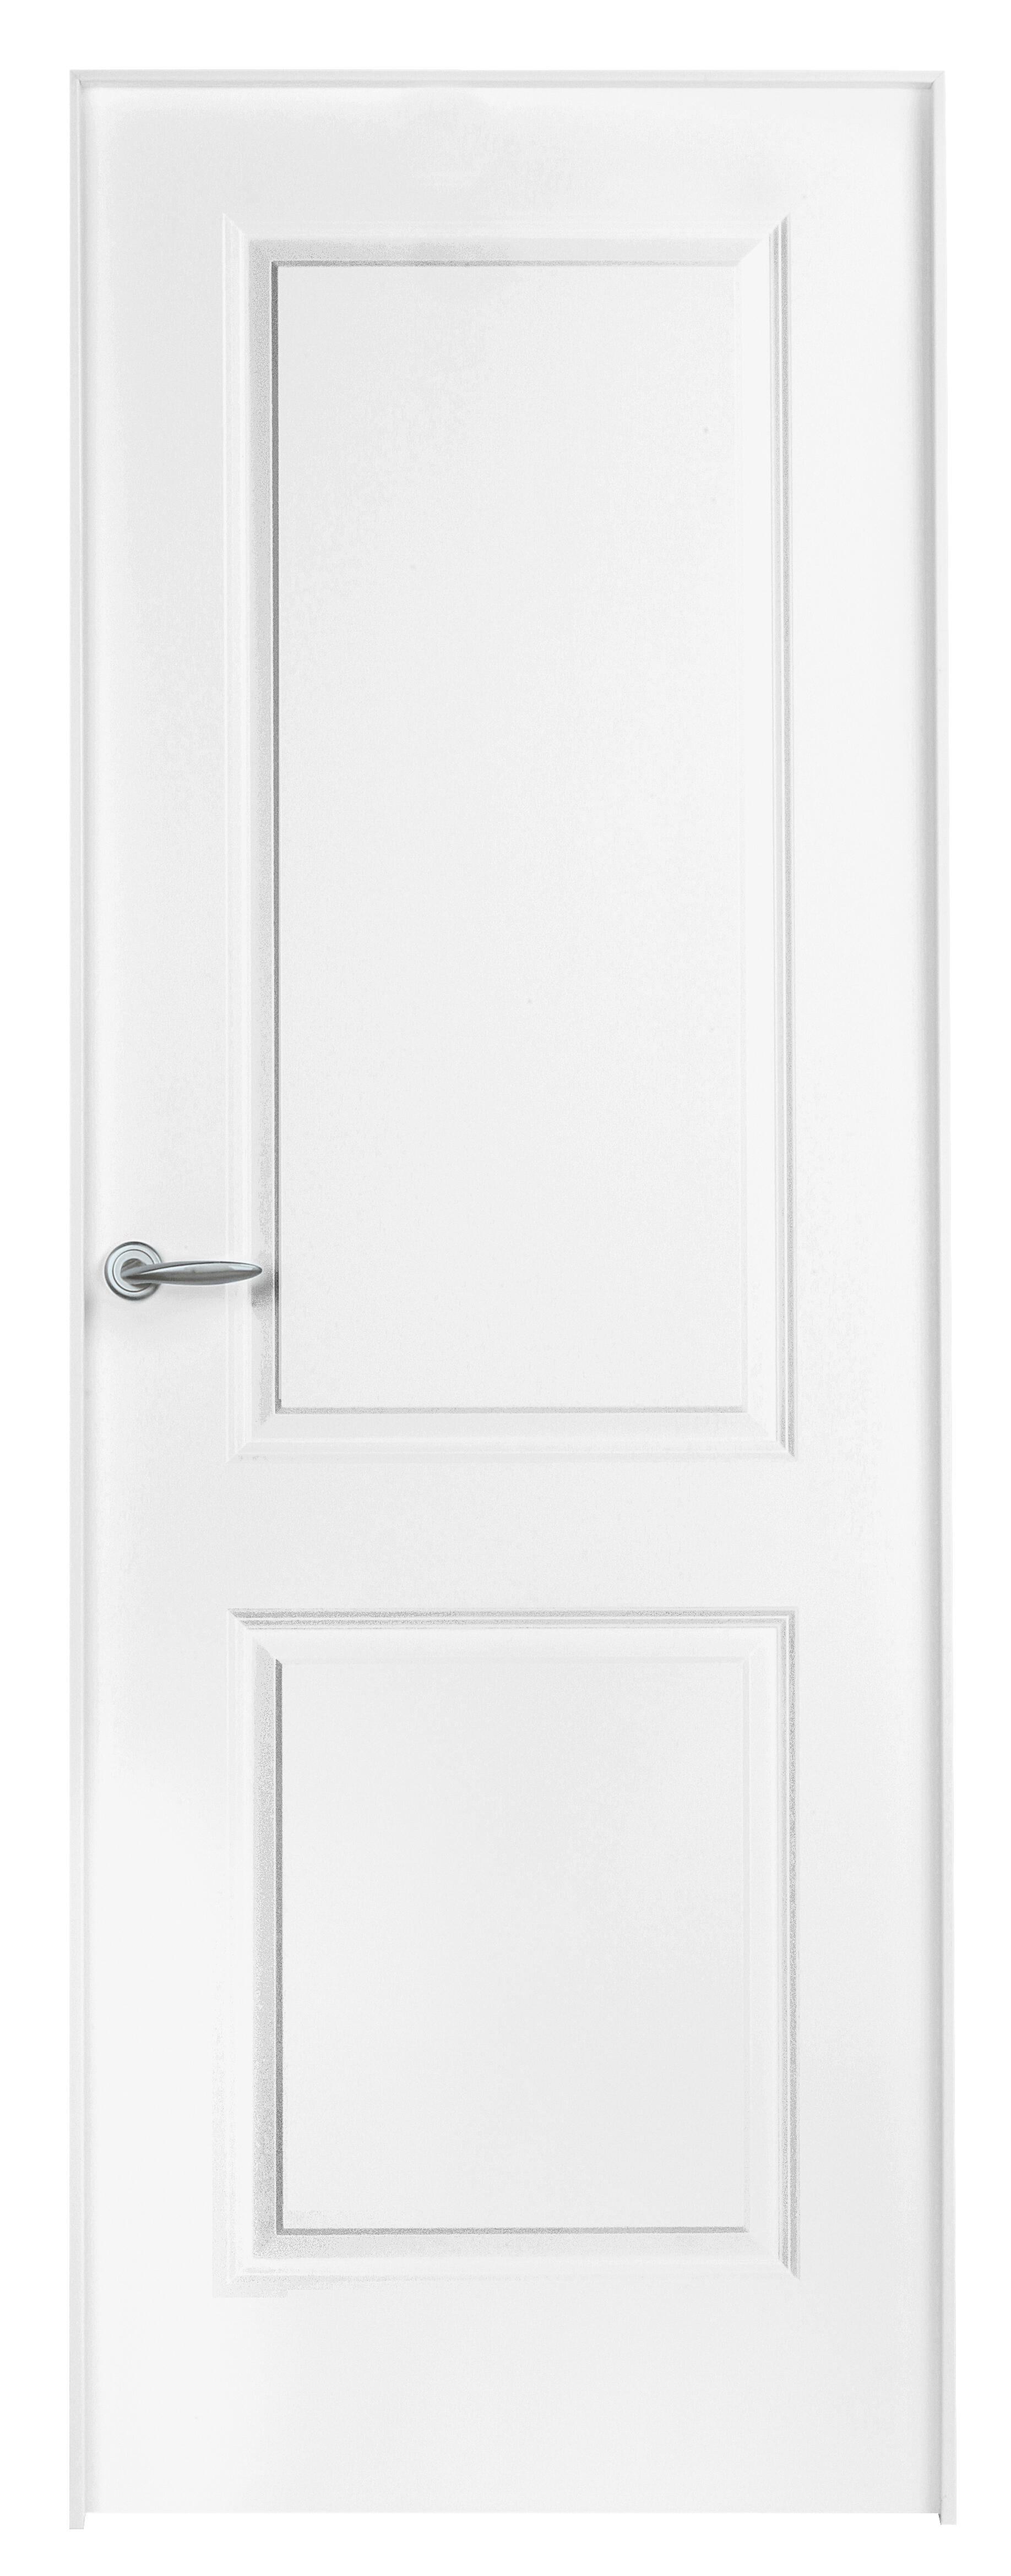 Puerta bonn blanco apertura derecha 92.5cm